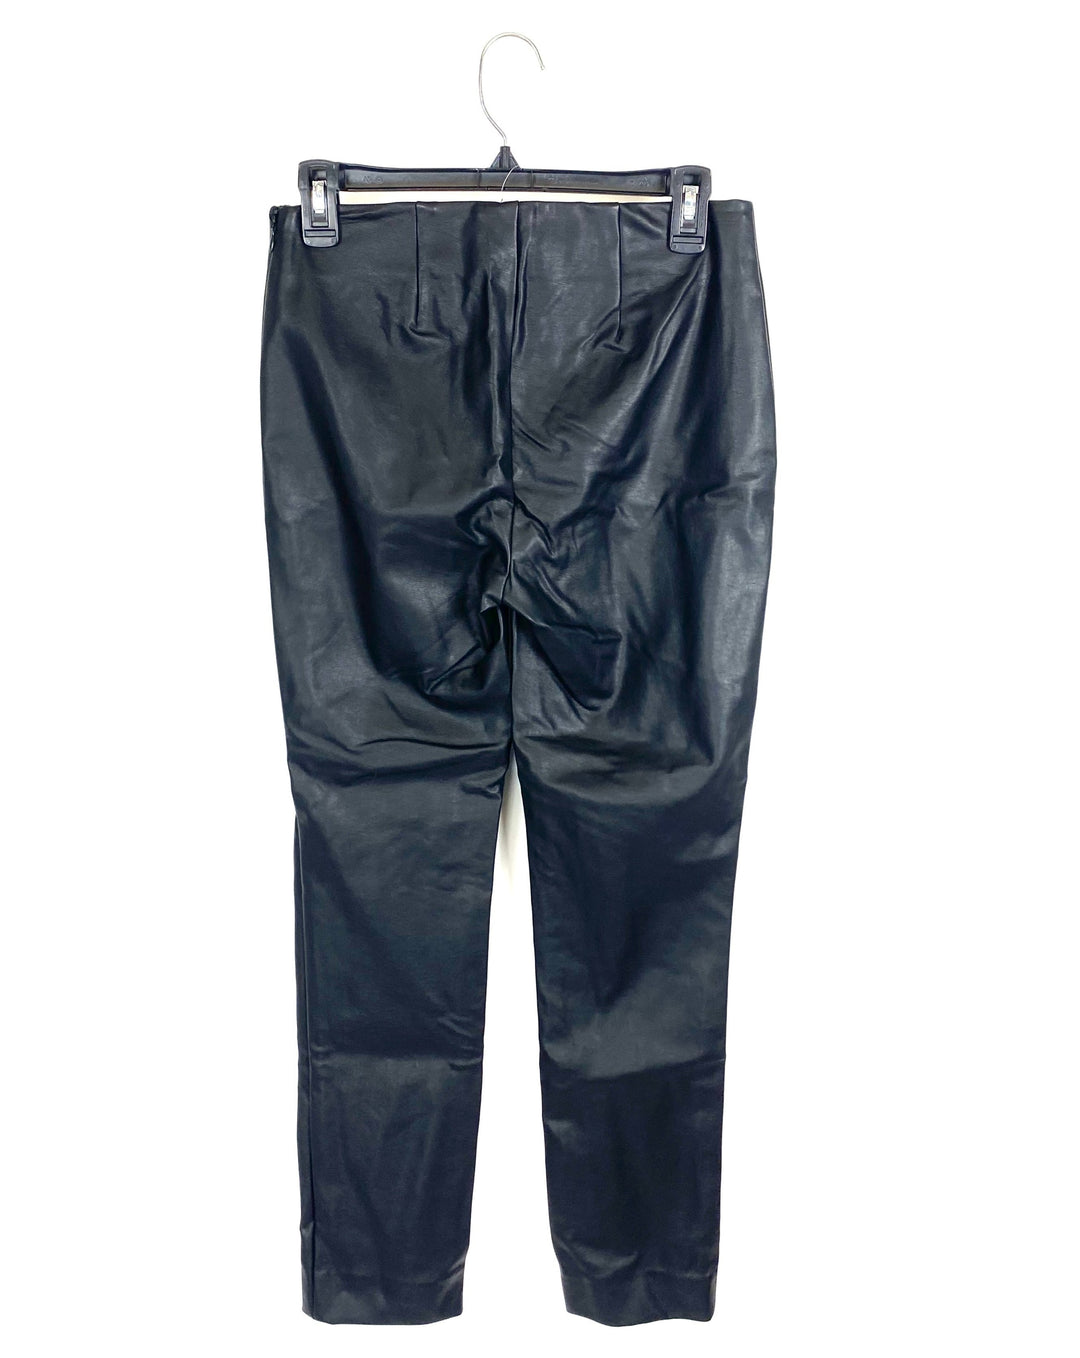 Faux Leather Pants - Size 4